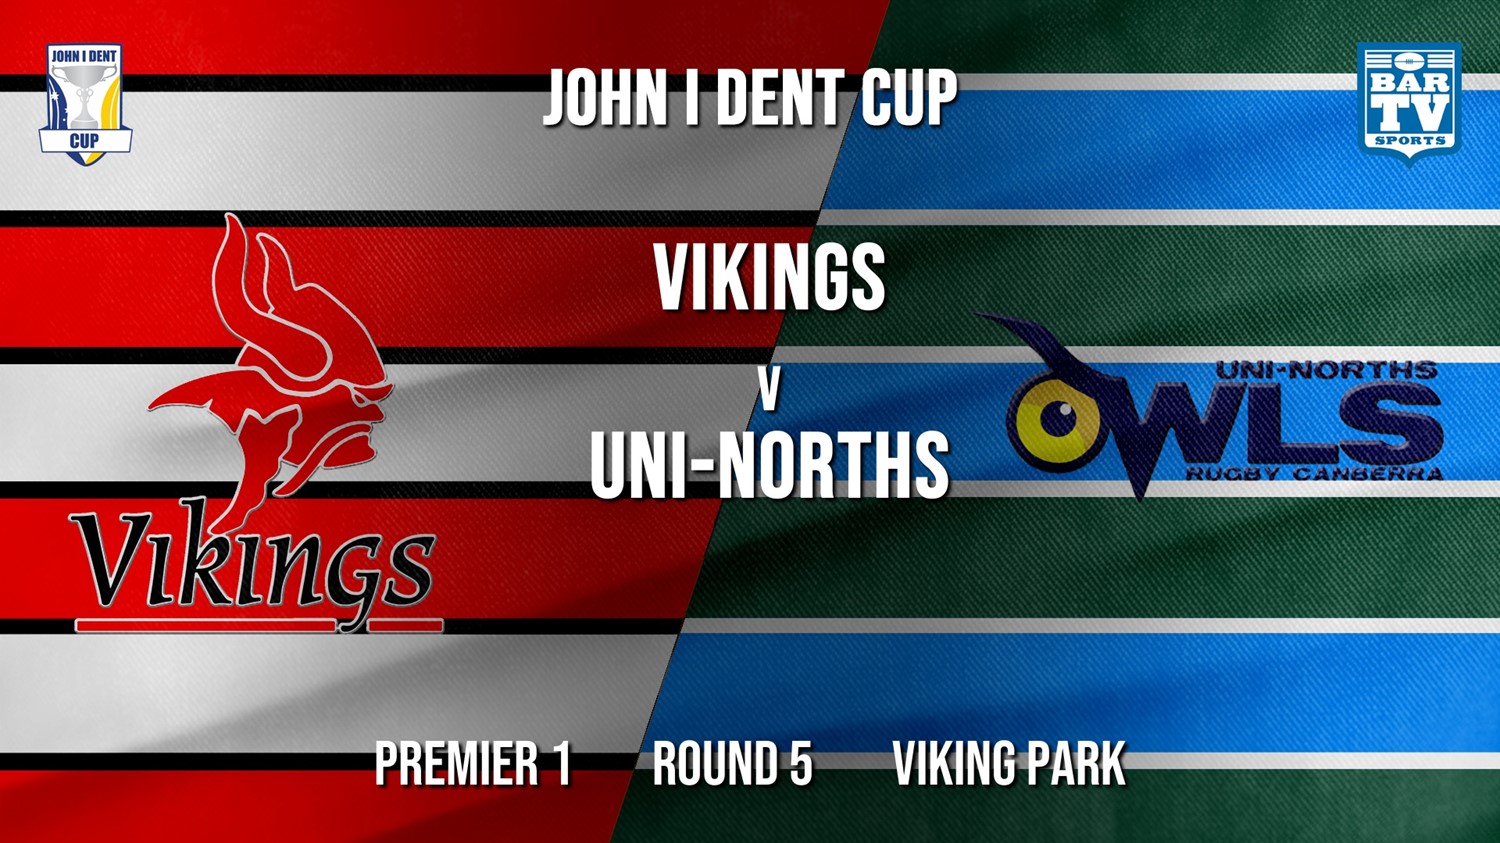 John I Dent Round 5 - Premier 1 - Tuggeranong Vikings v UNI-Norths Minigame Slate Image